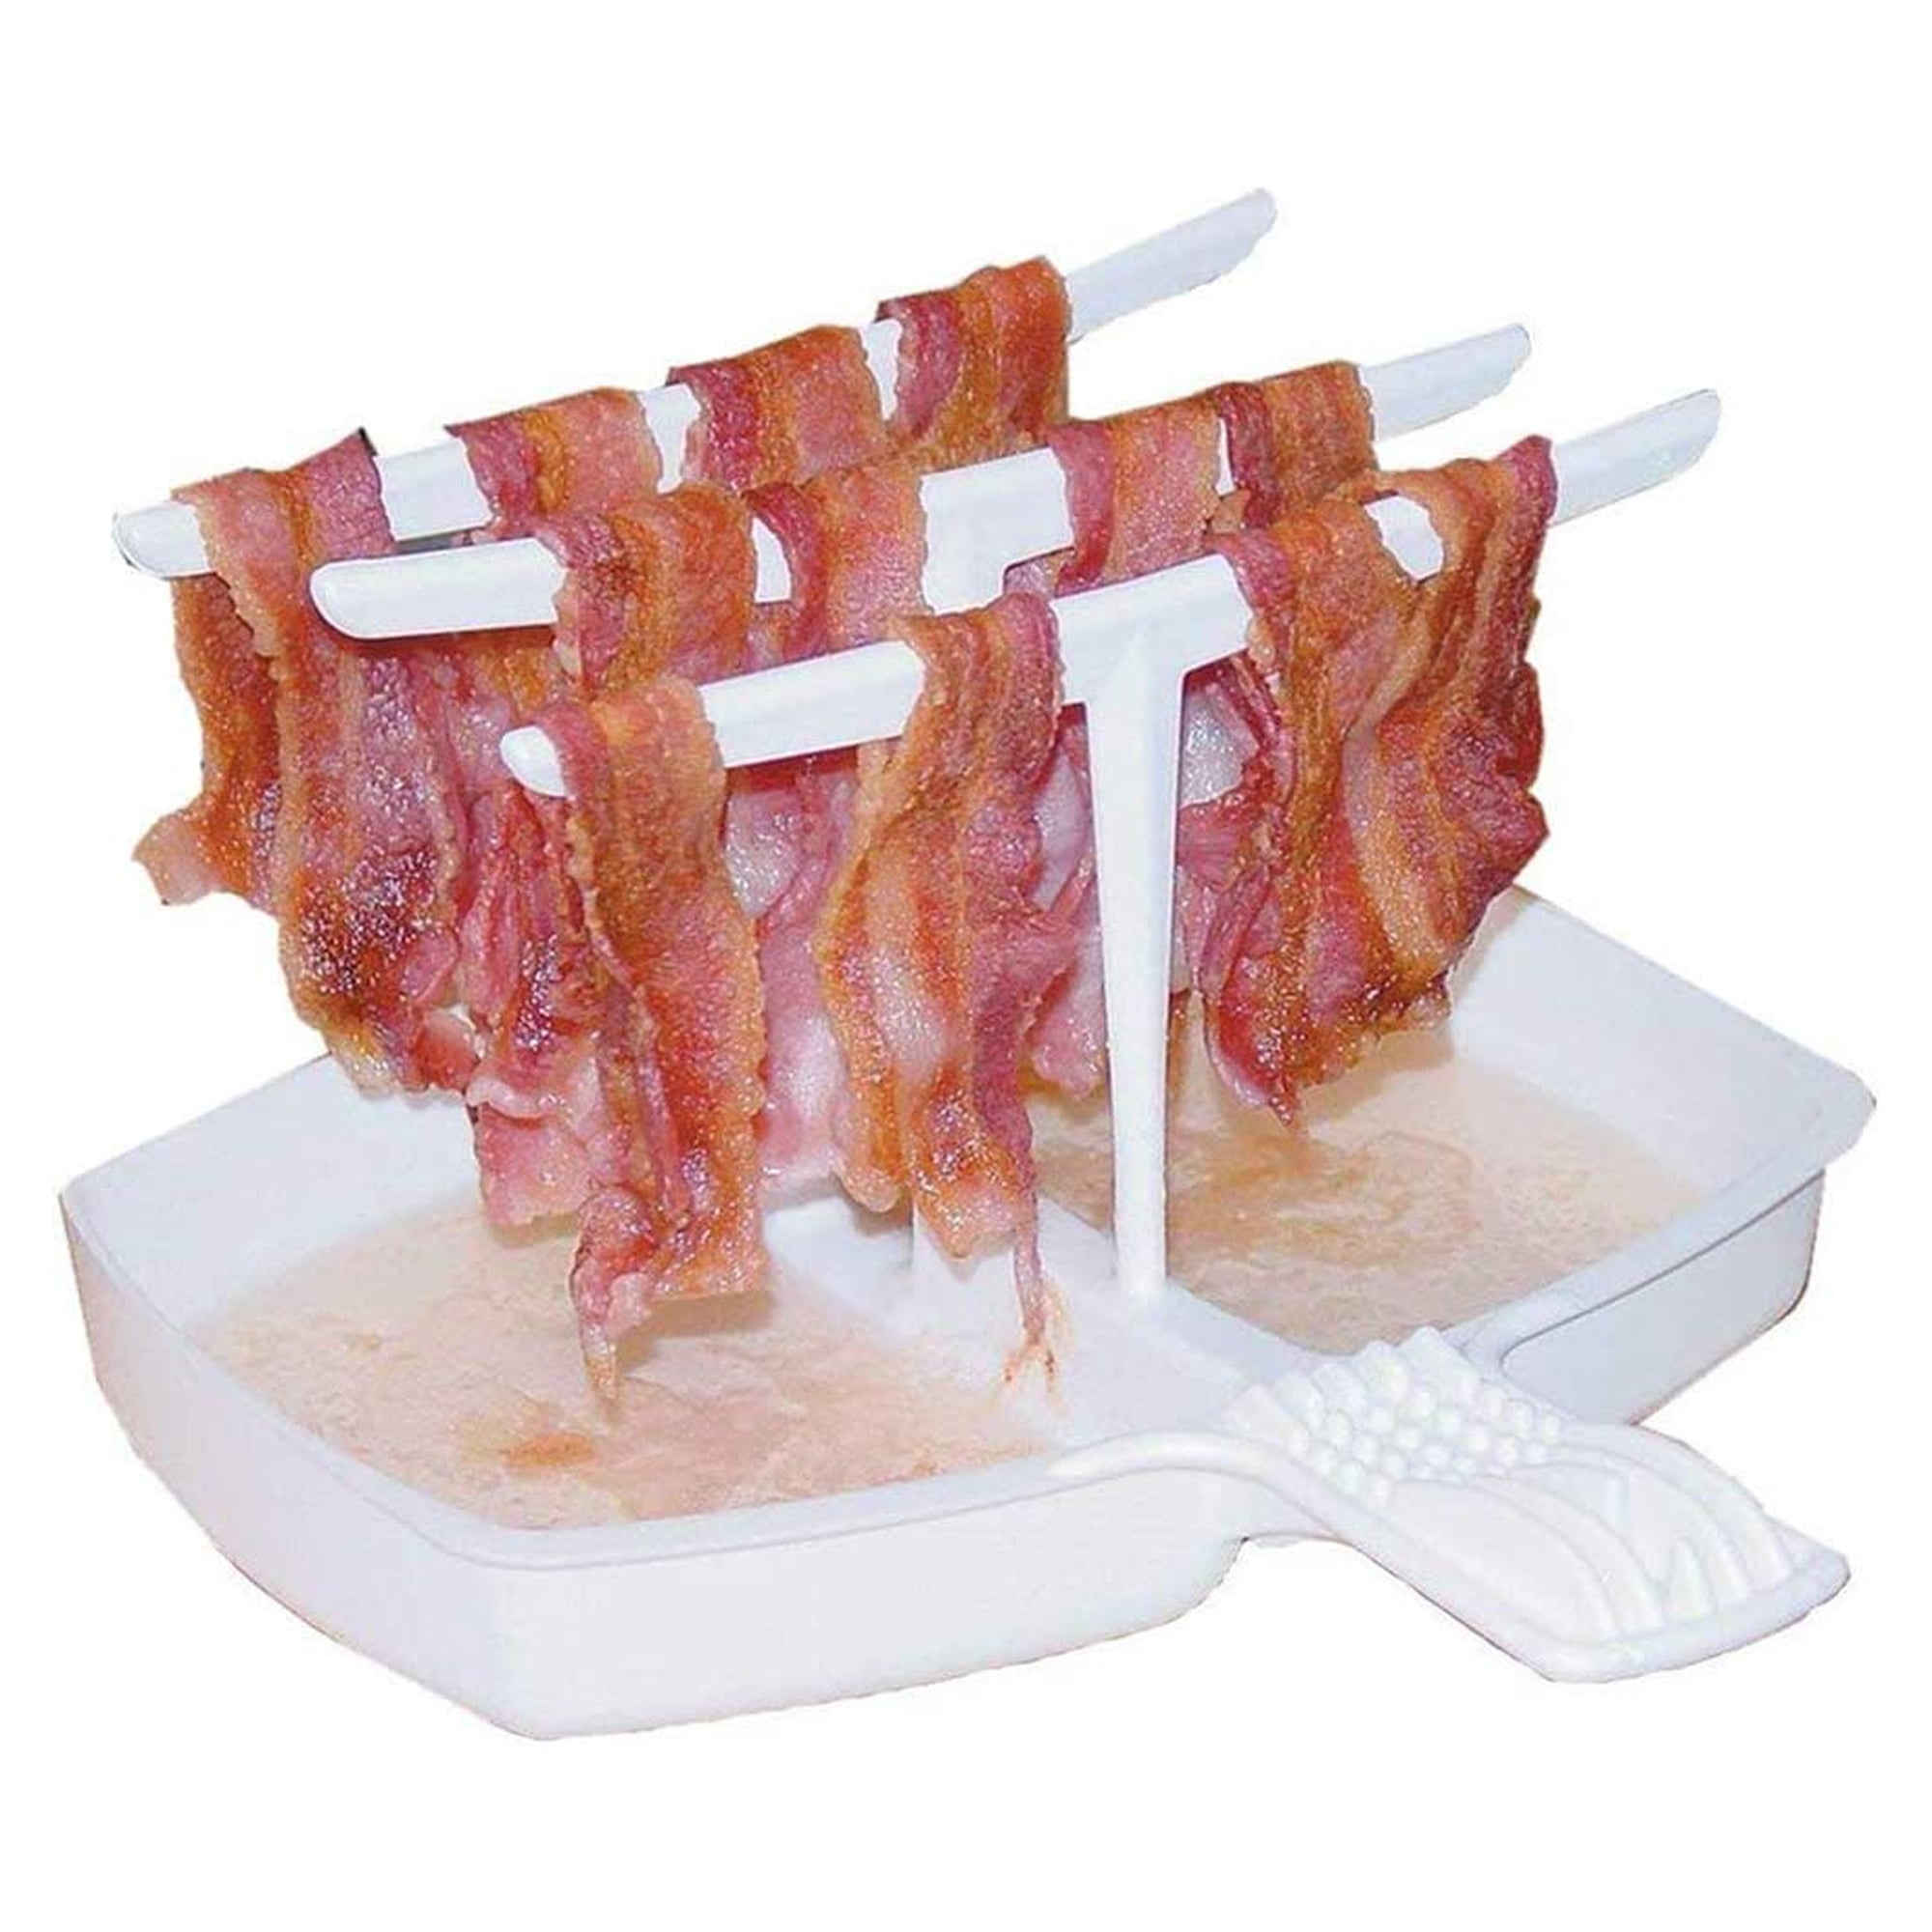 2 x Microwave It Microwaveable Bacon Crisper Cook Defrosting  Plastic Tray rack 